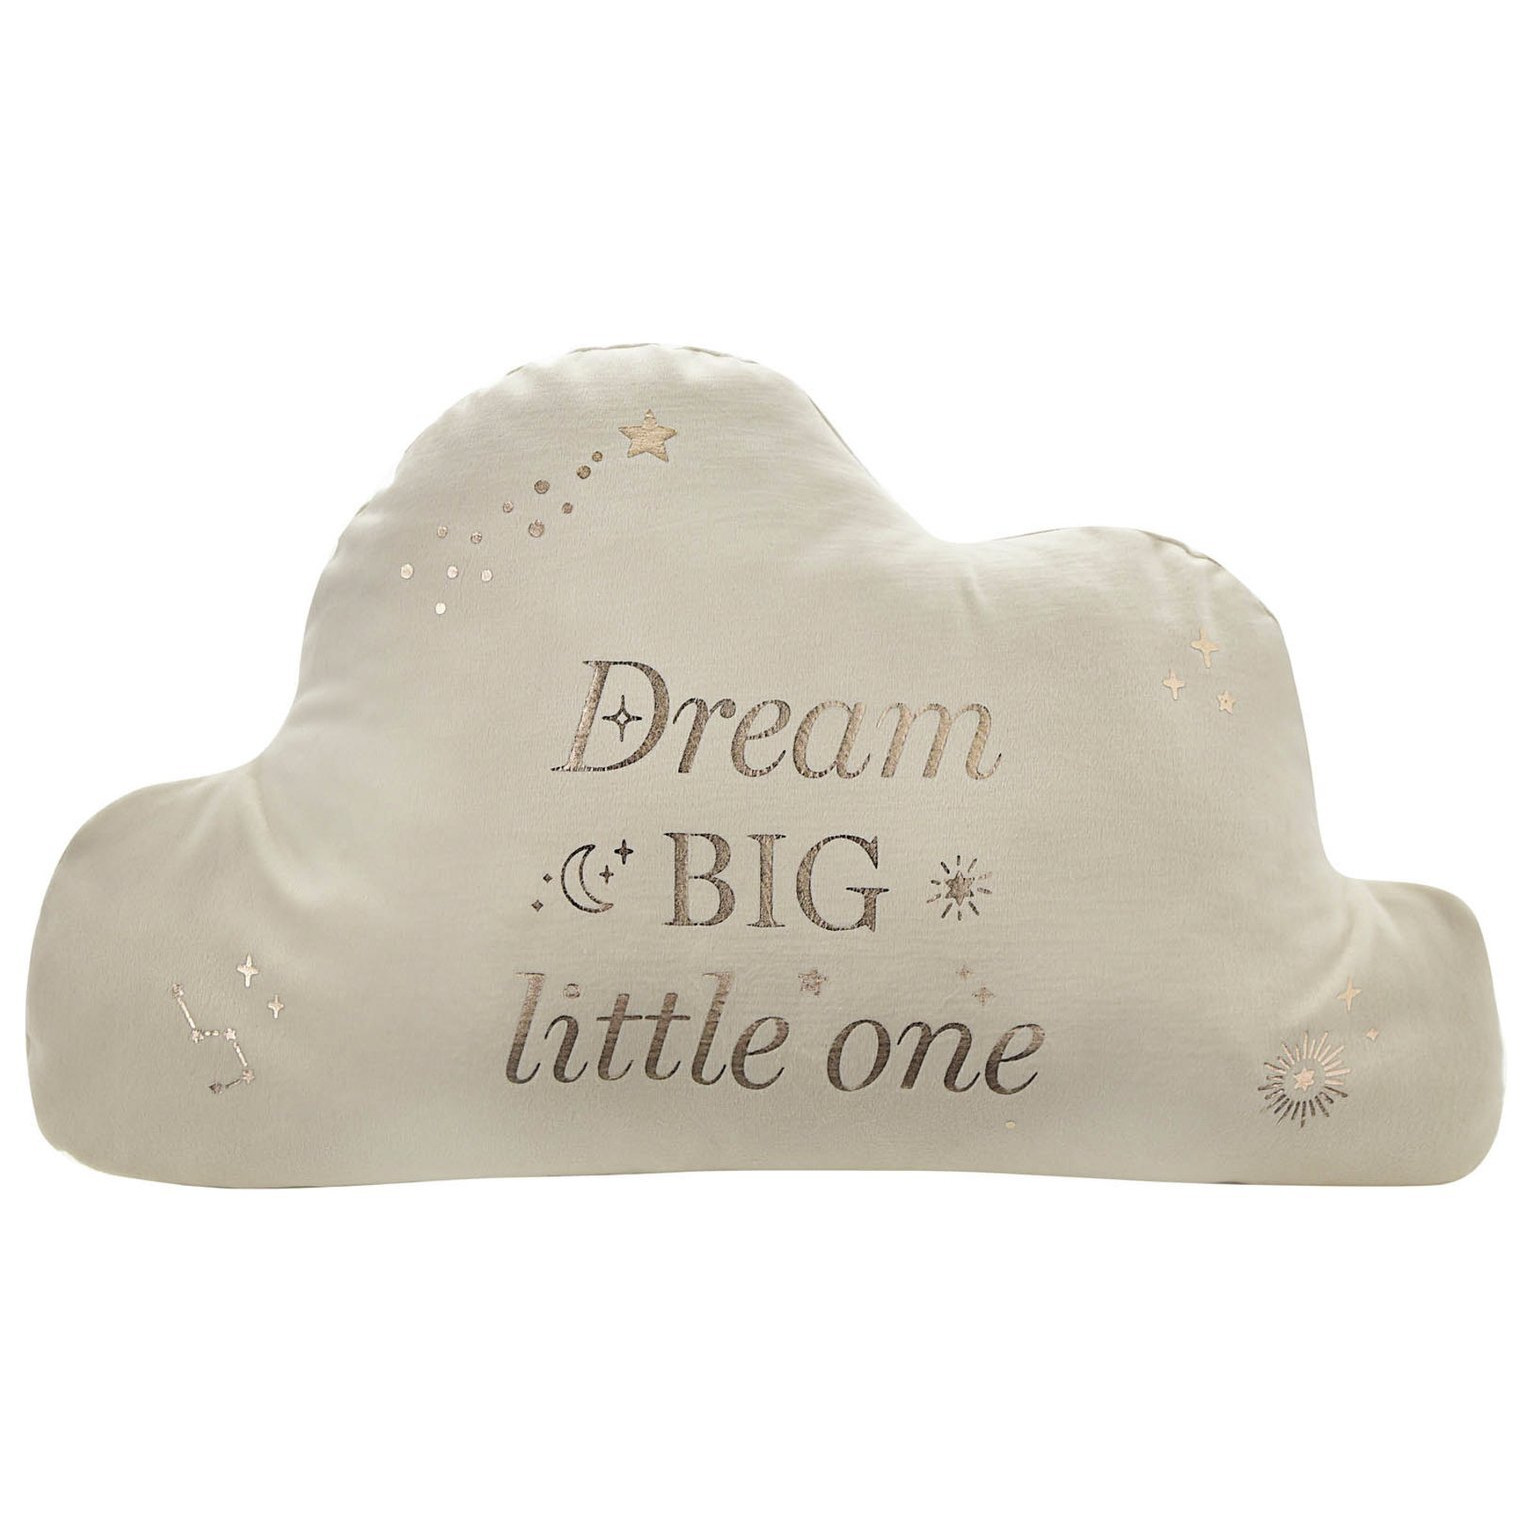 Bambino Cloud Velvet Cushion - White - 35x22cm - image 1